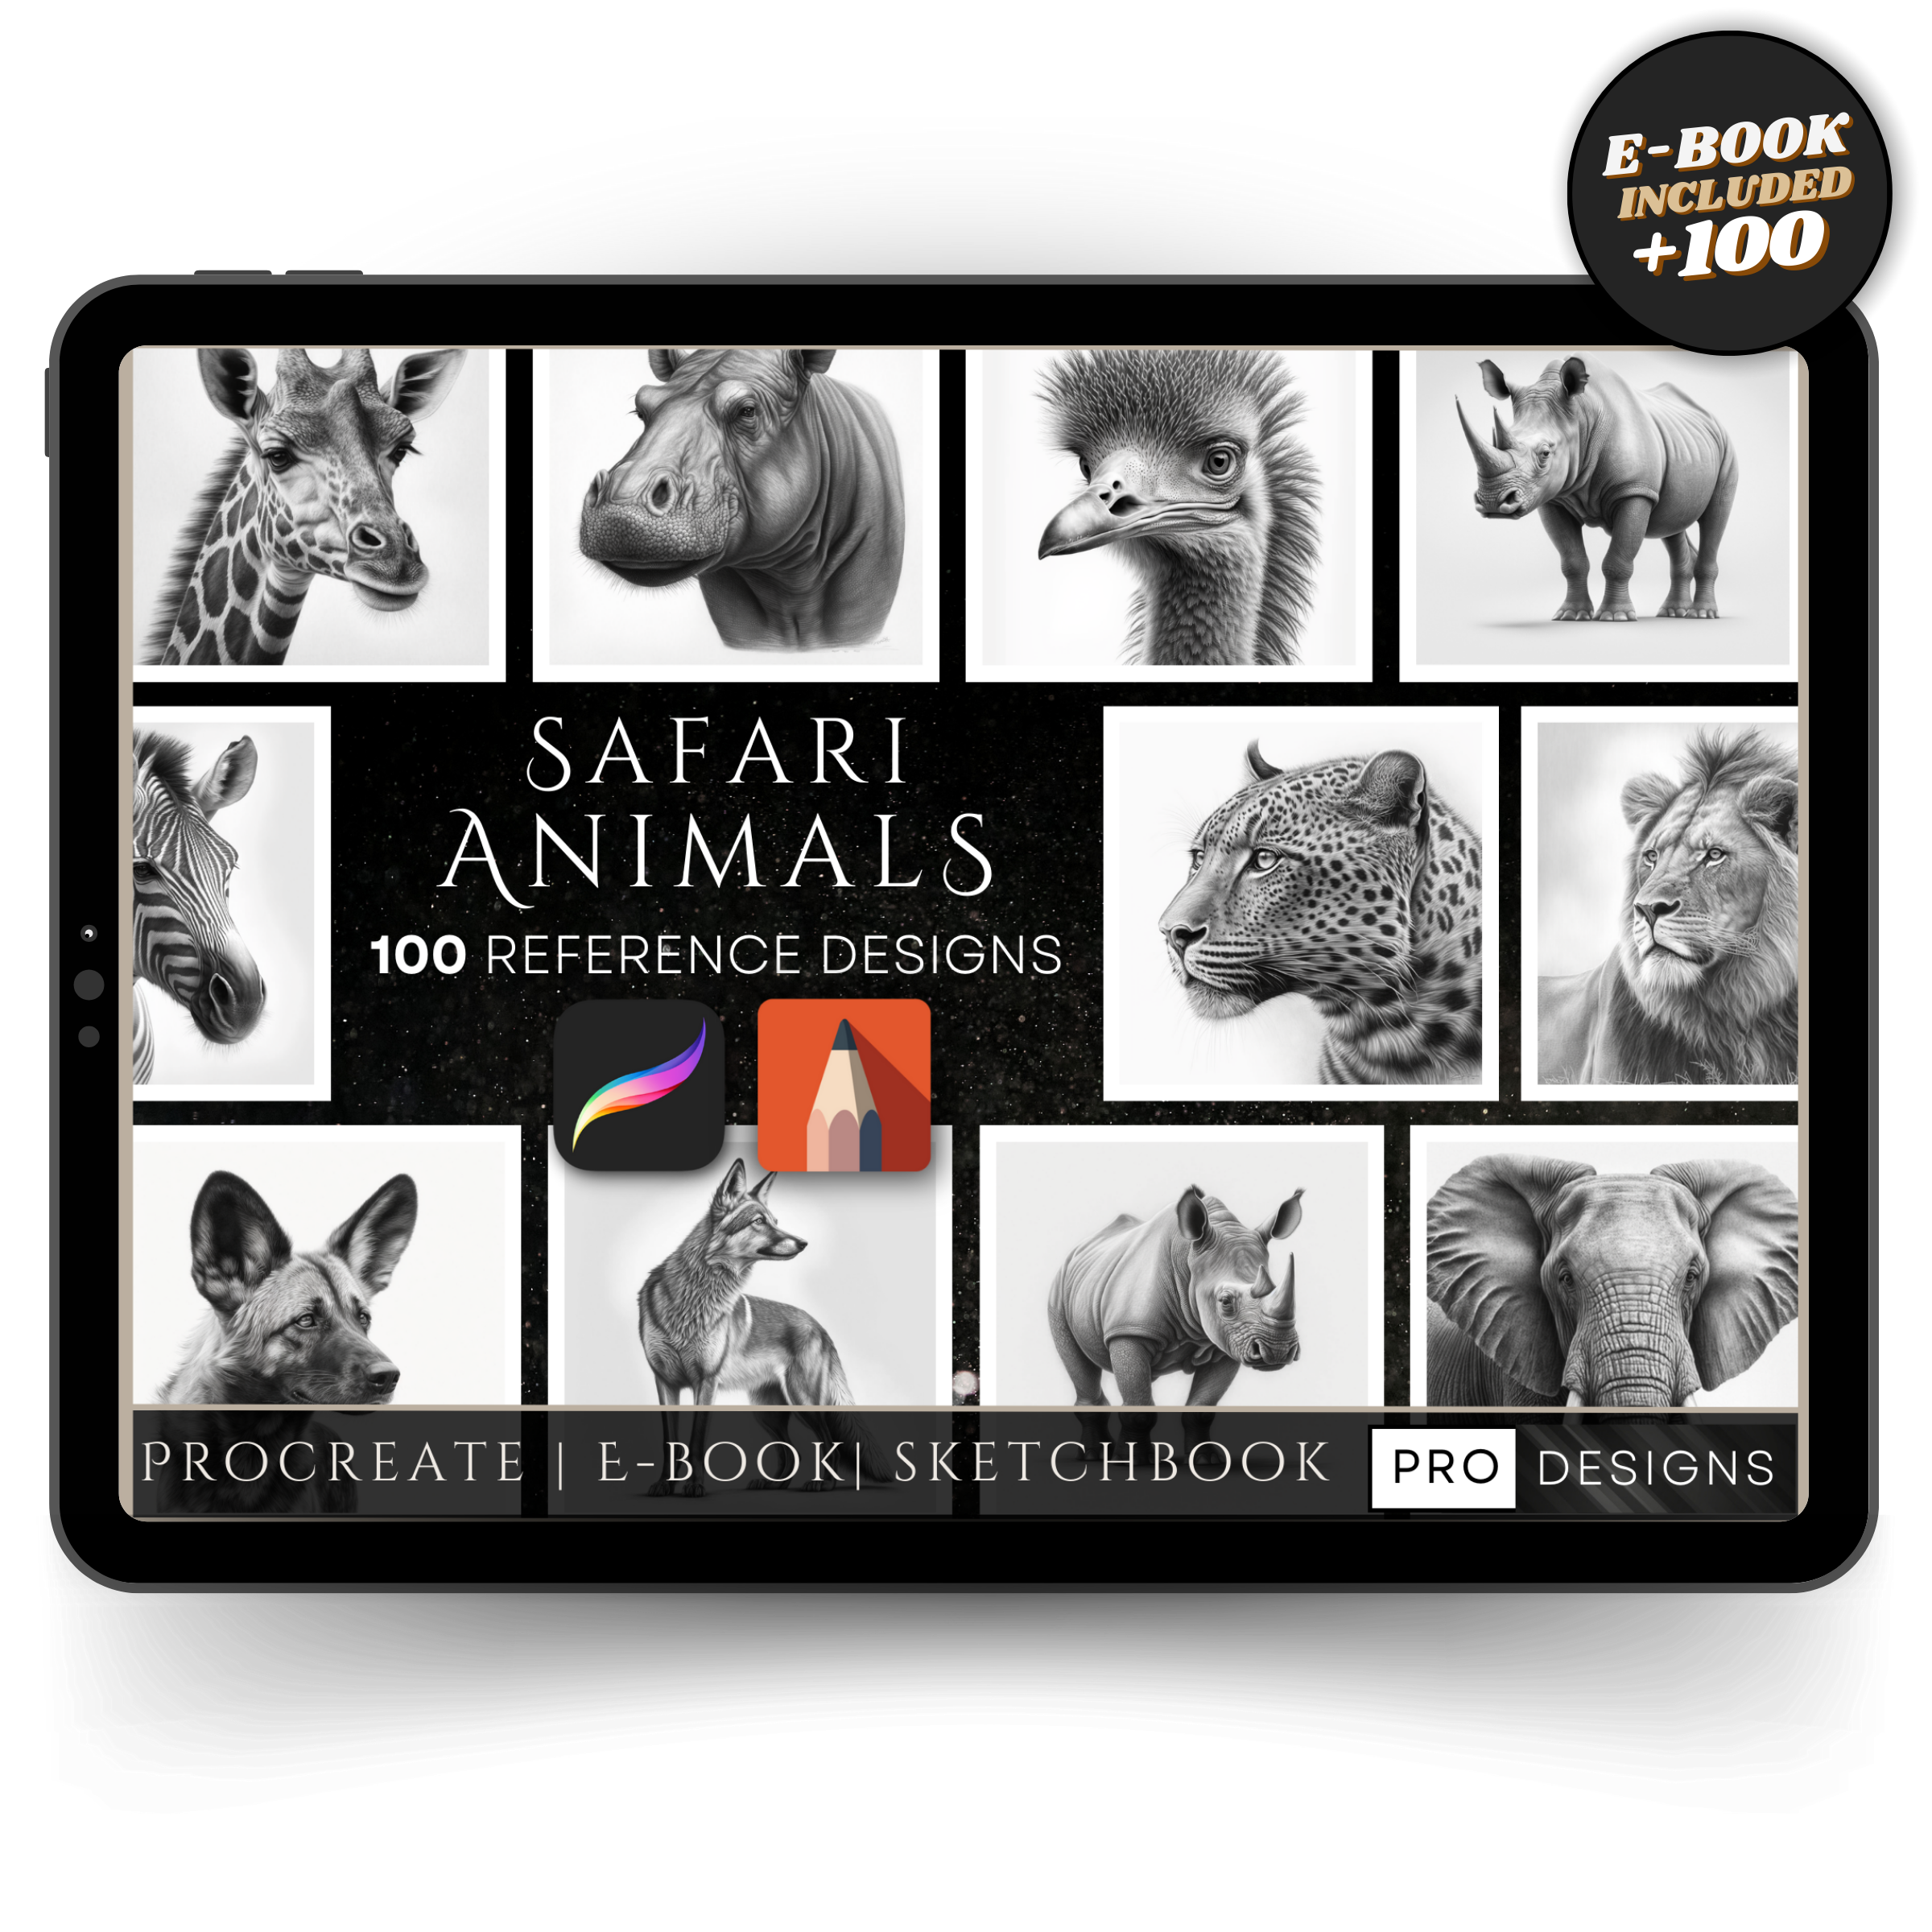 "Savanna Sojourn" - The Safari Animals Collection